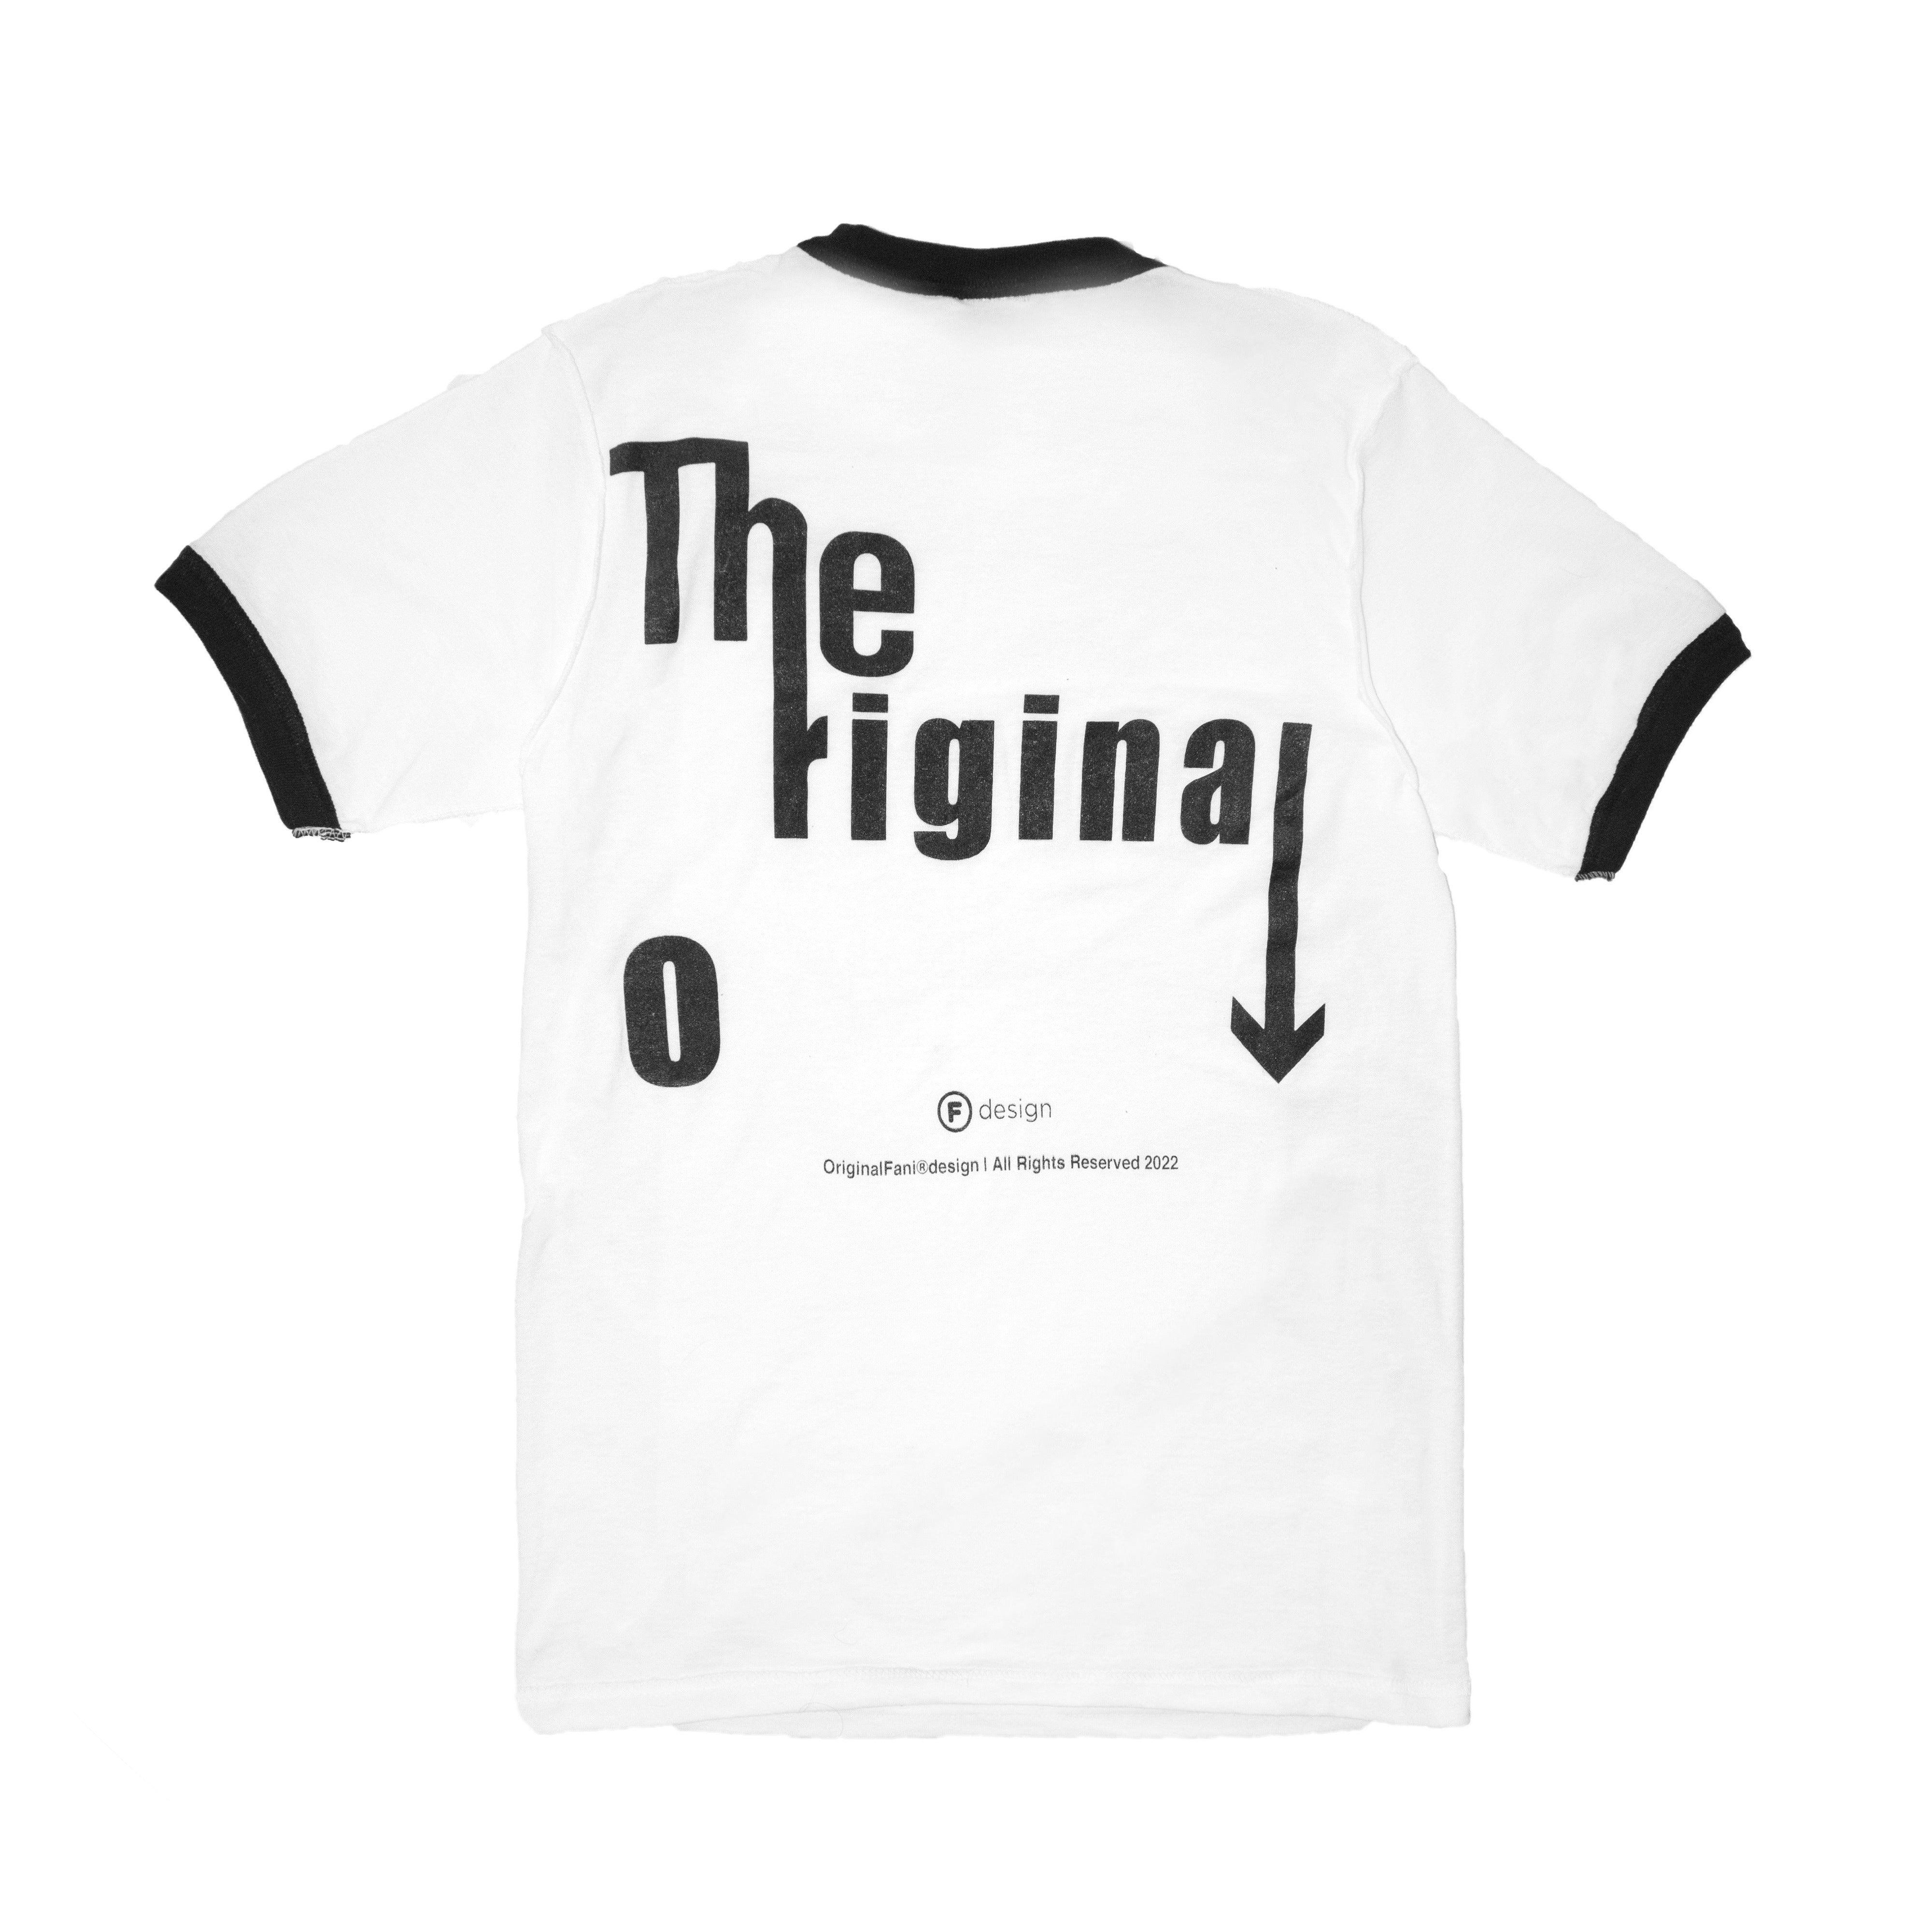 OriginalFani®design "Who" Ringer T-Shirt (Black)